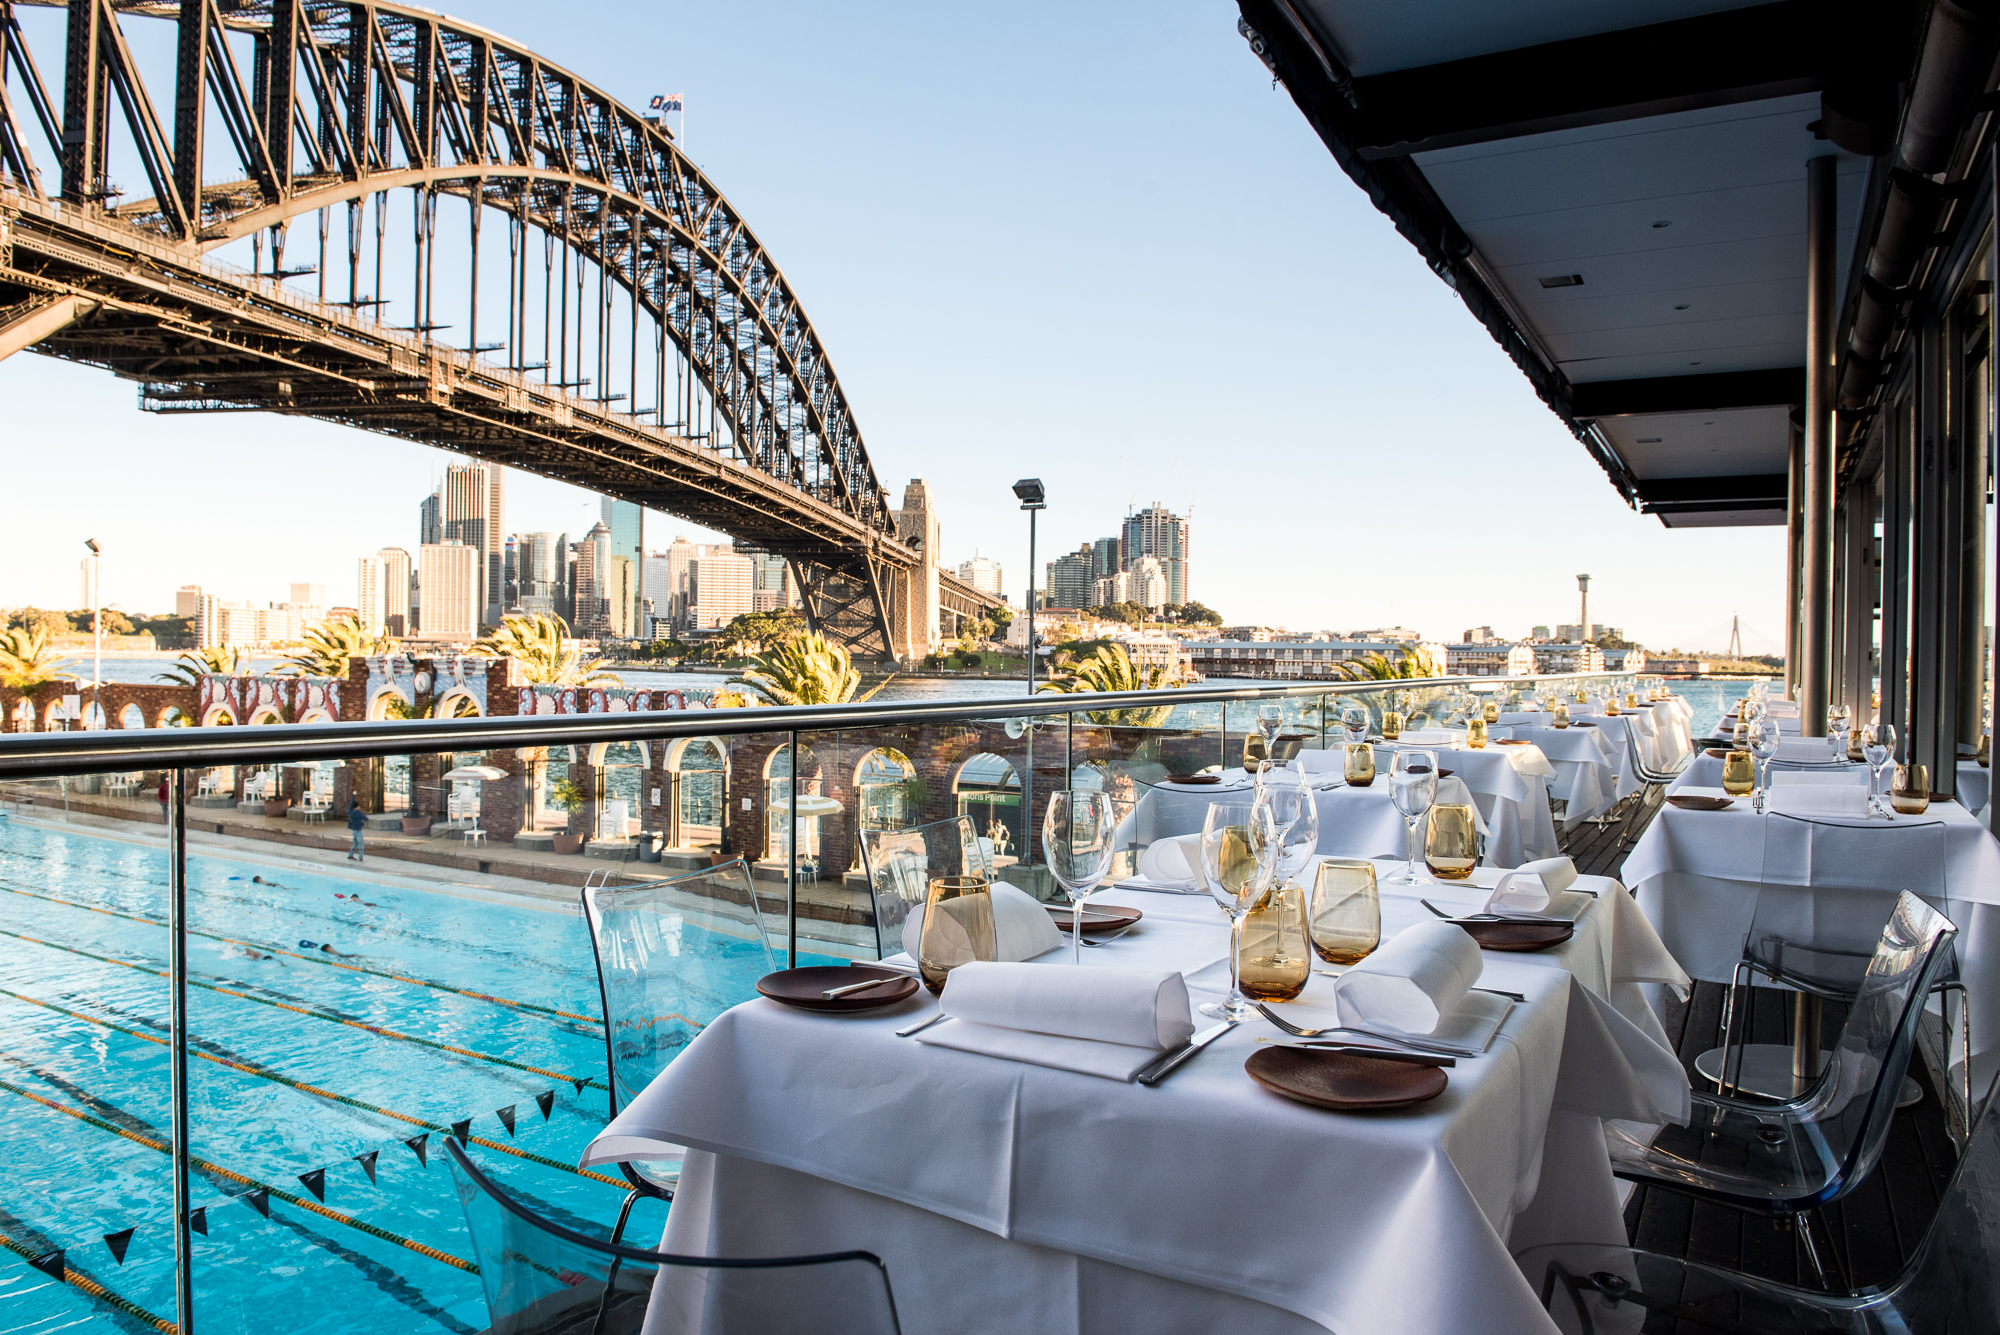 William Blue Dining: Savvy Reason Every Sydneysider Should Visit